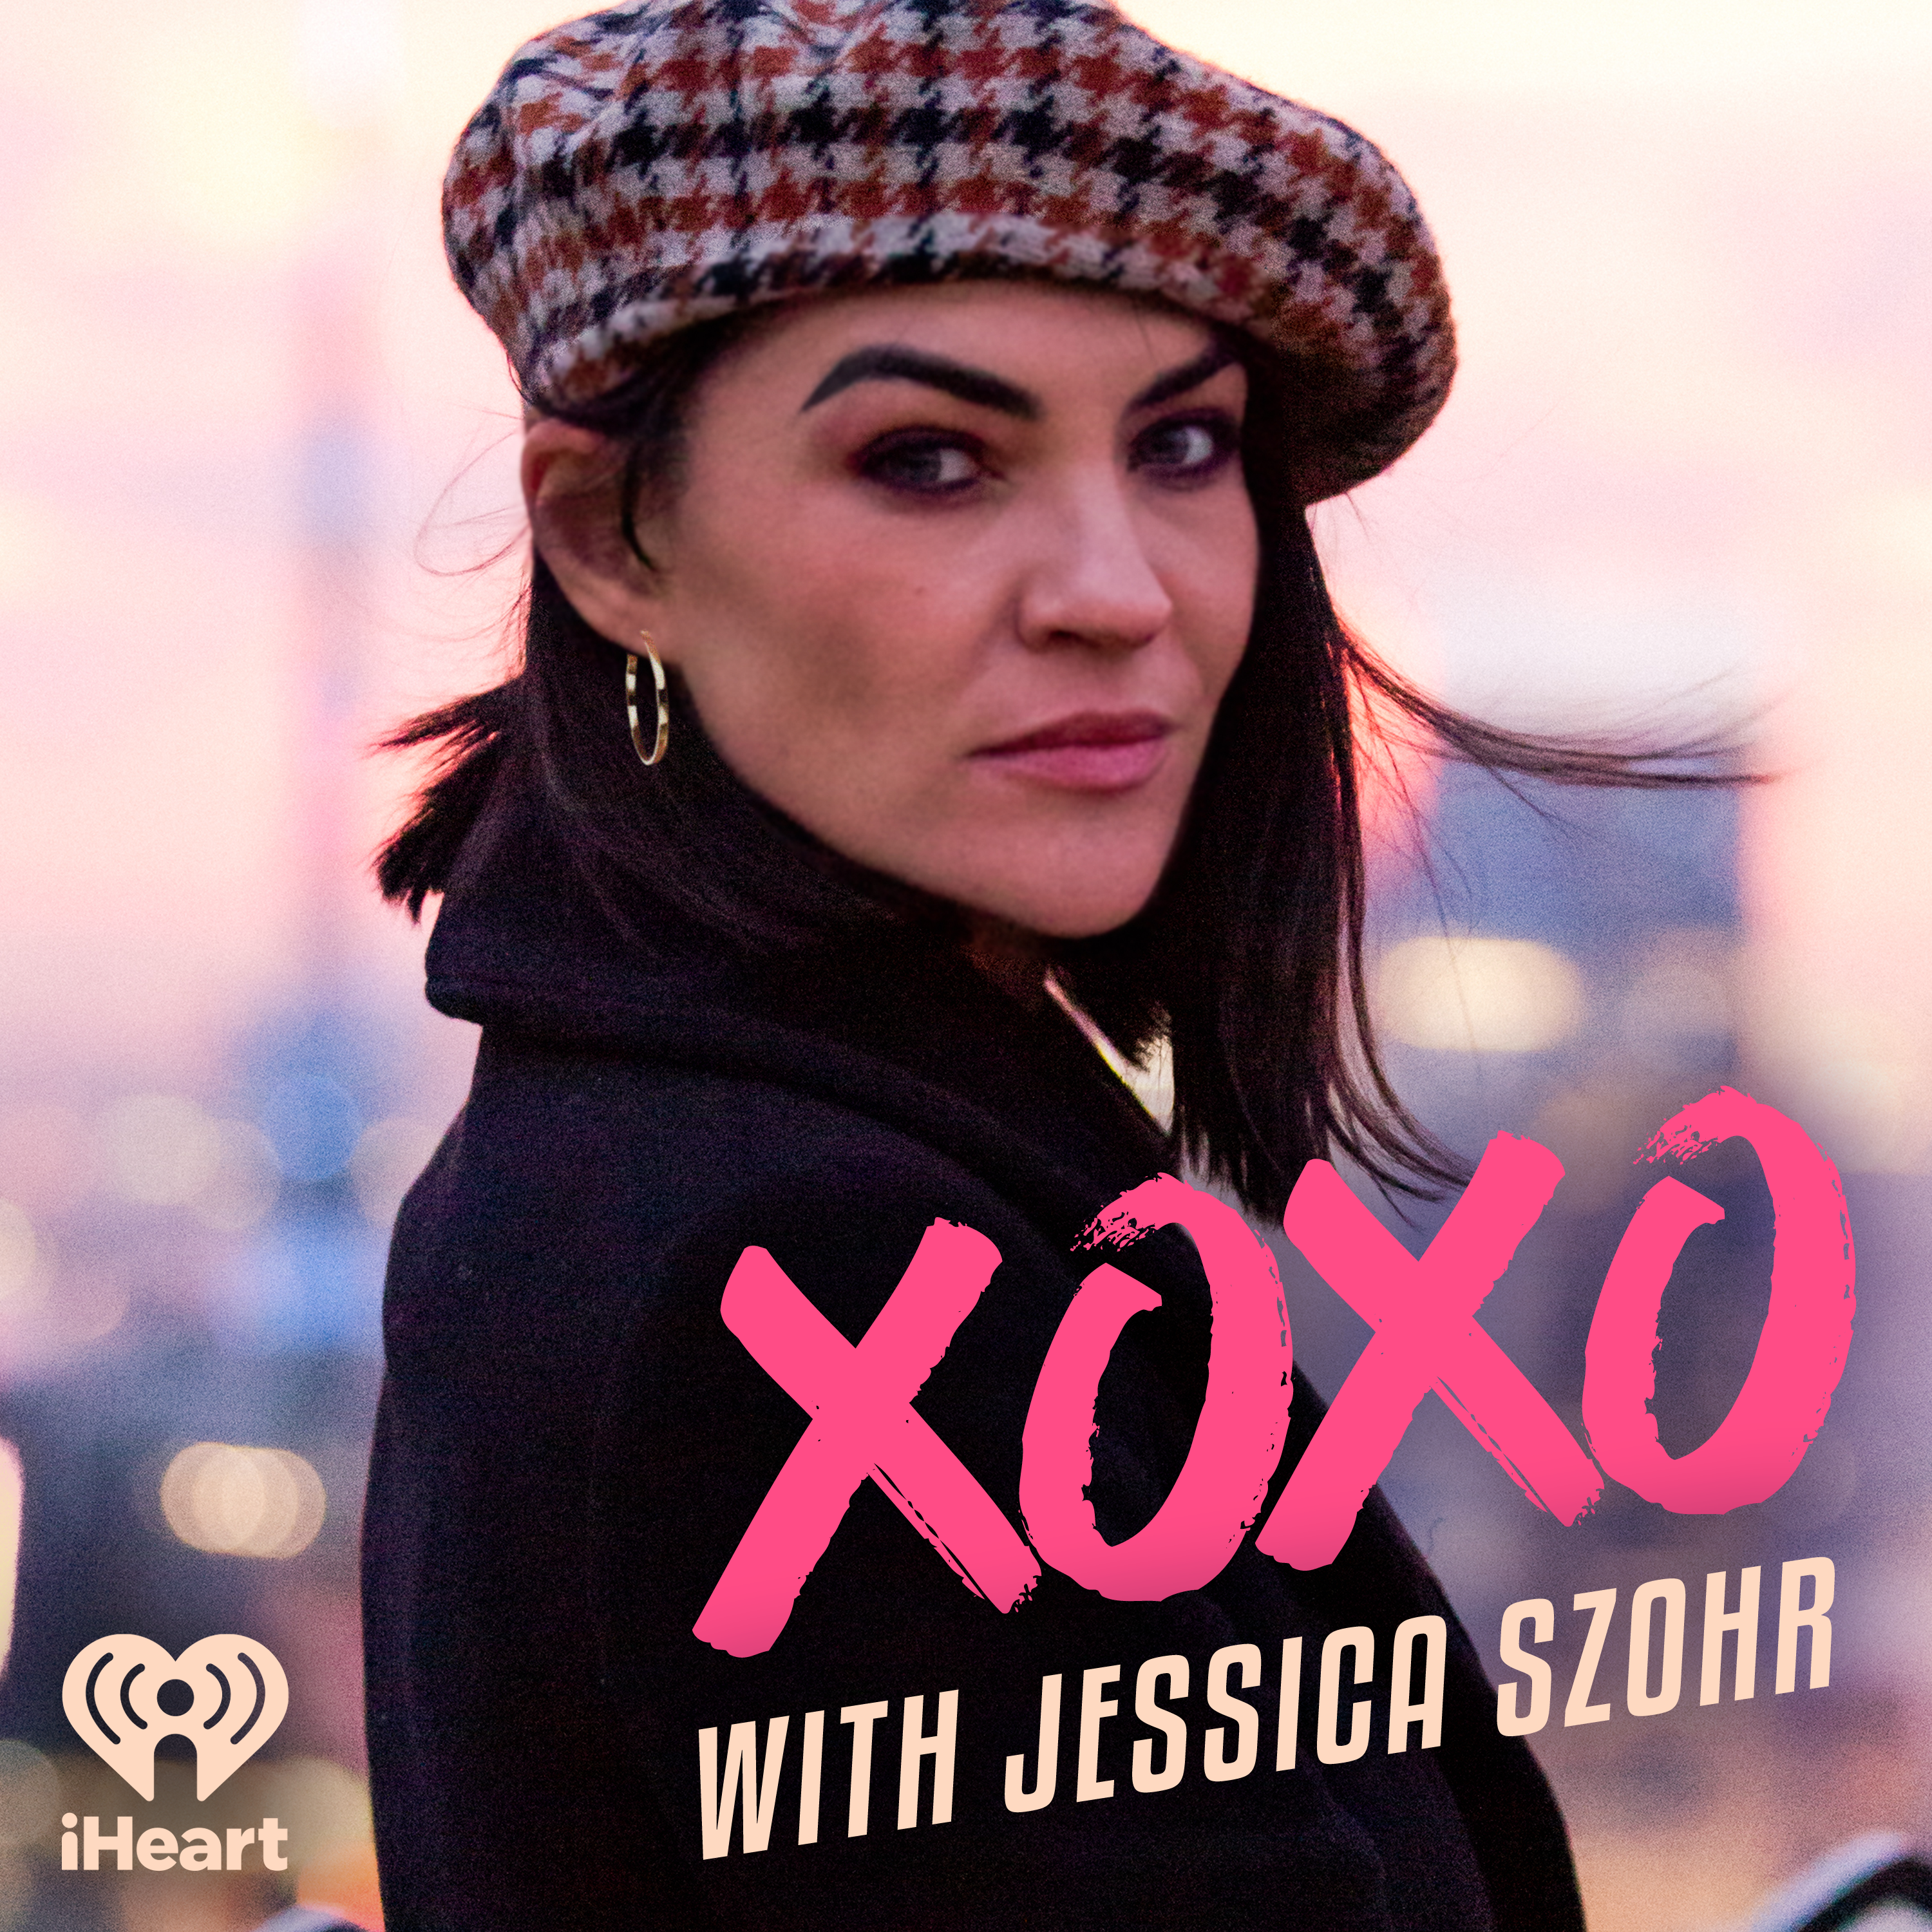 XOXO with Jessica Szohr iHeart